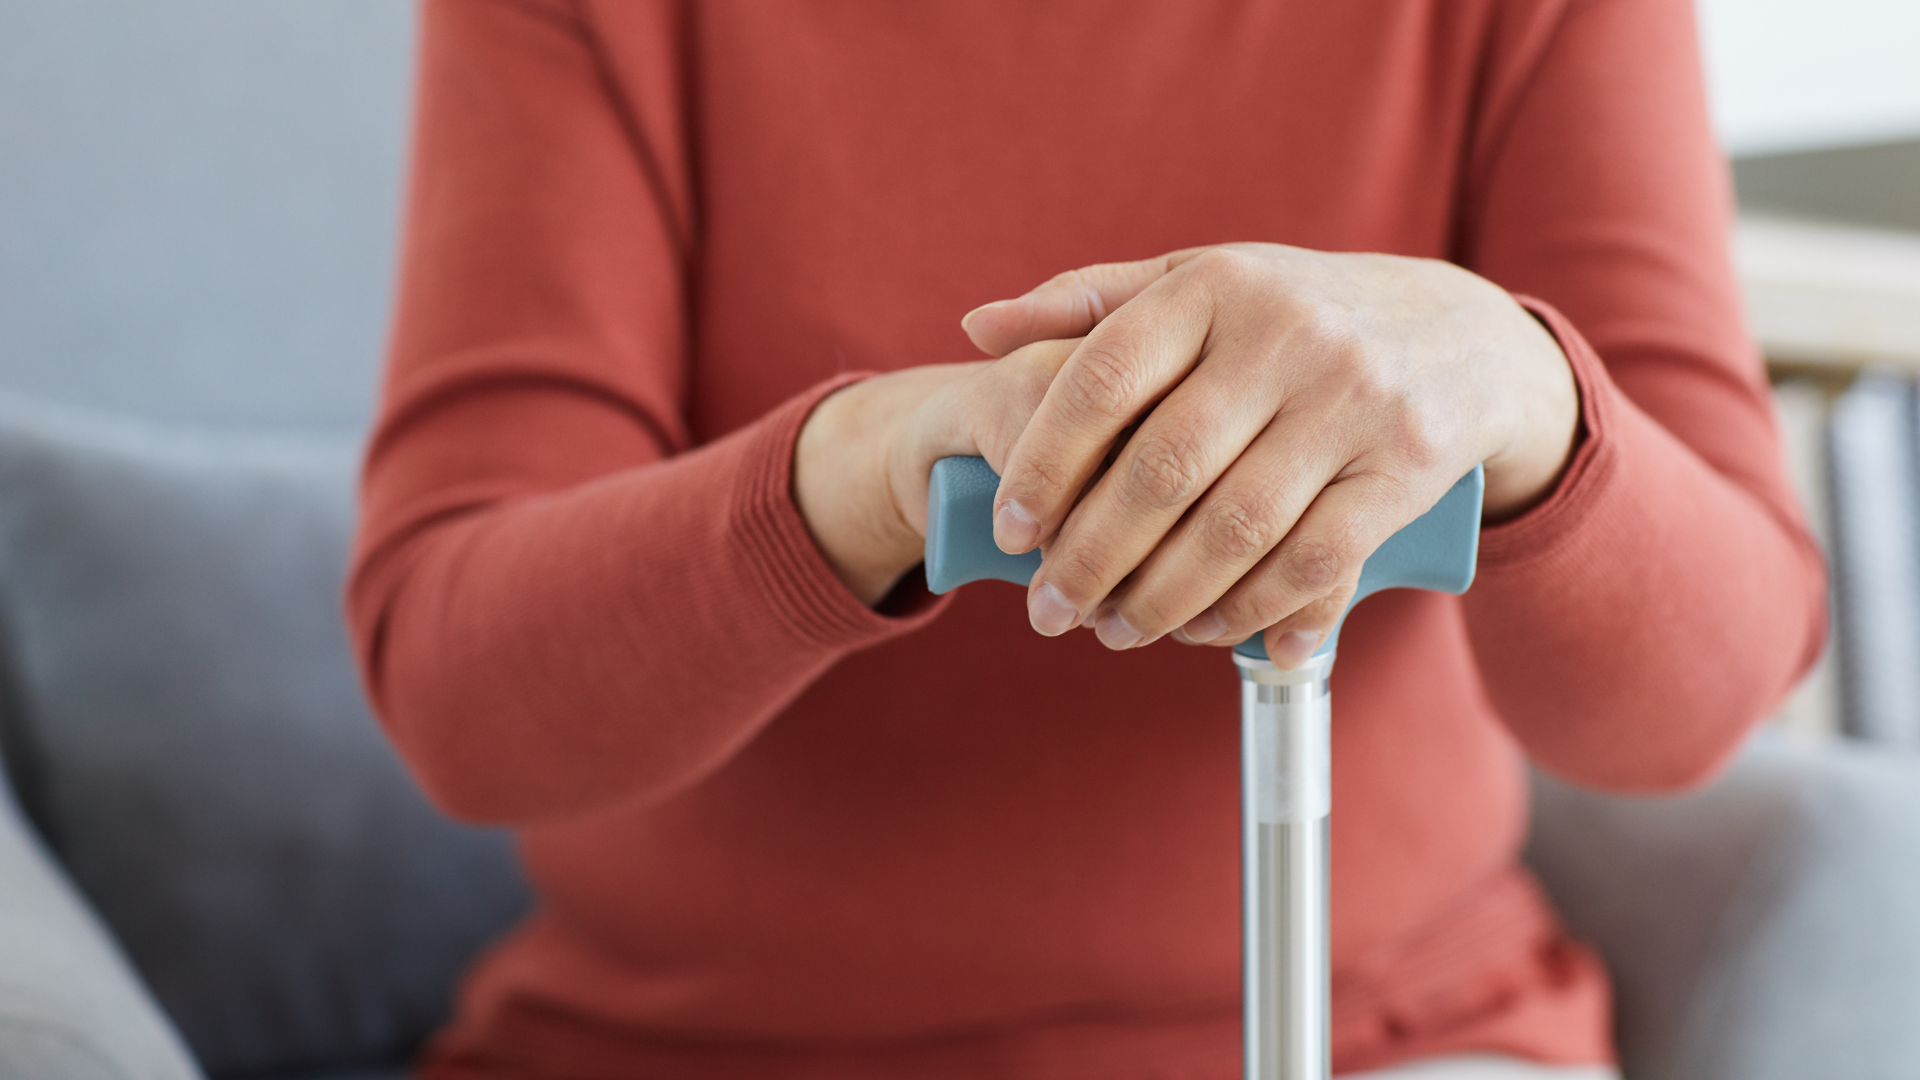 A close up of a lady holding a crutch